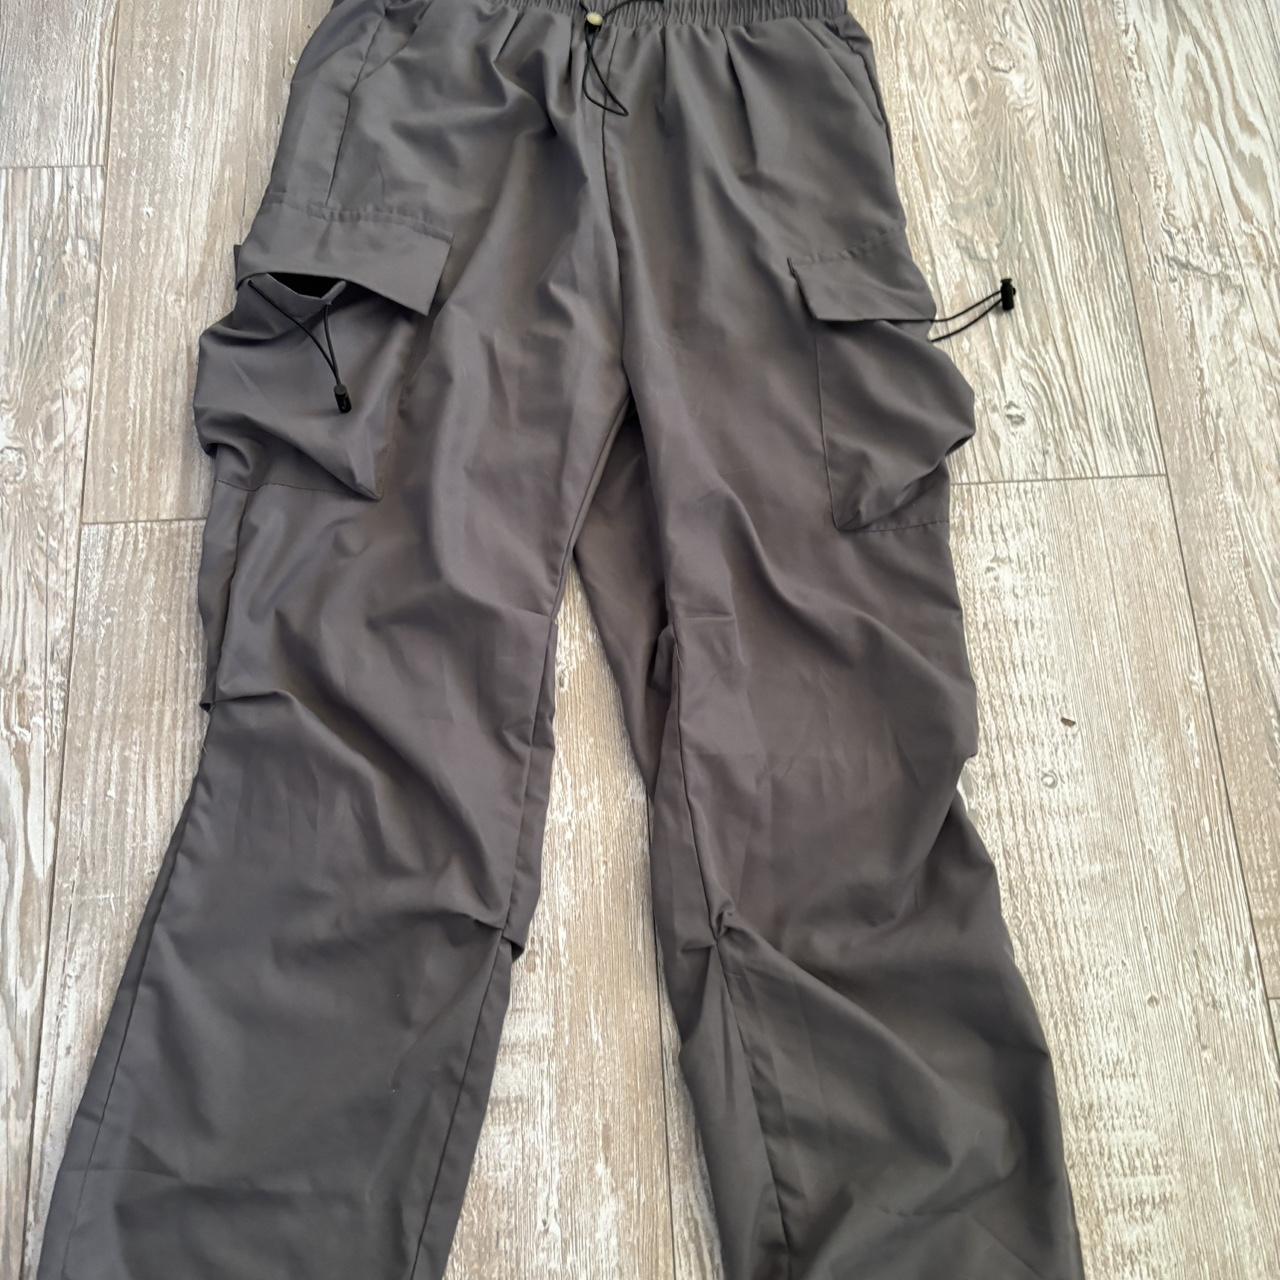 Grey pants 100% polyester Waist size 29-30 Can... - Depop